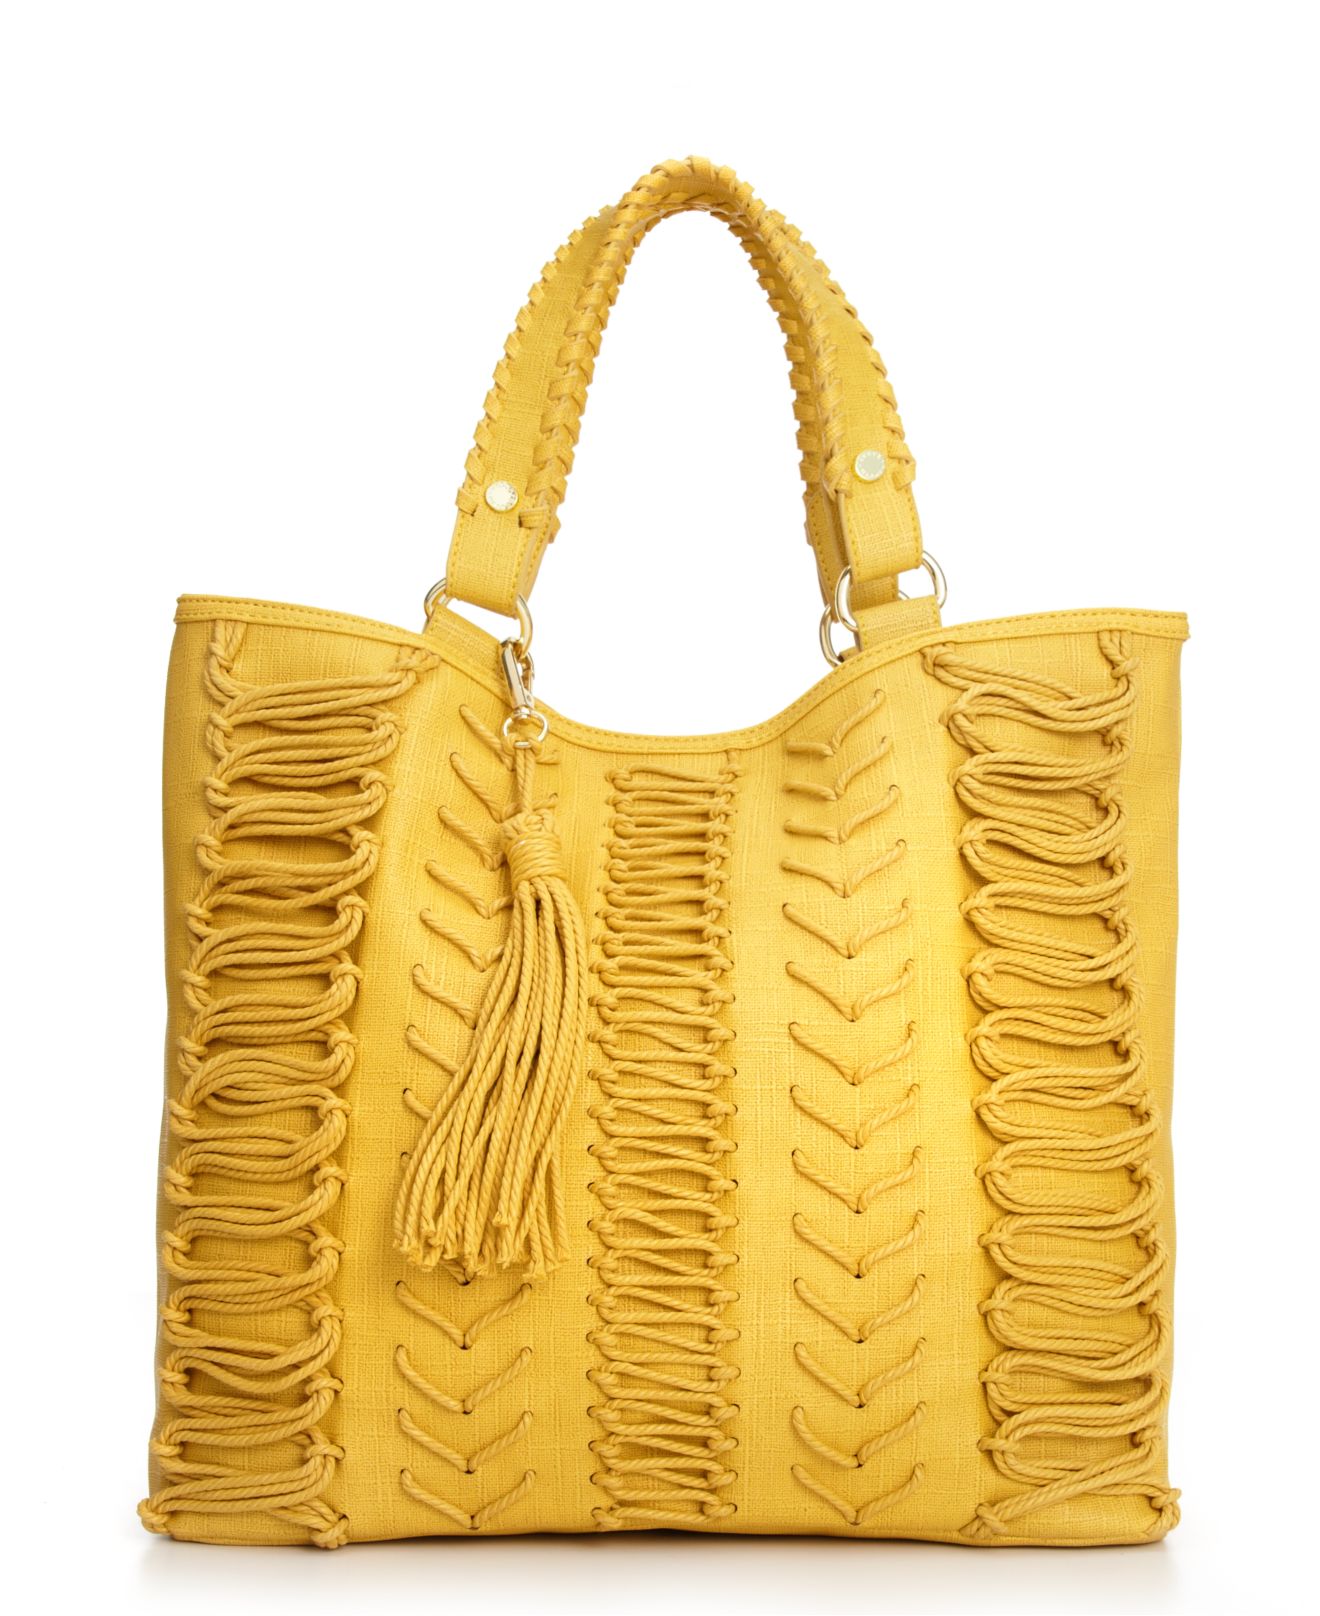 Mustard Bag by Macys | Steve madden handbags, Celebrity bags, My style bags